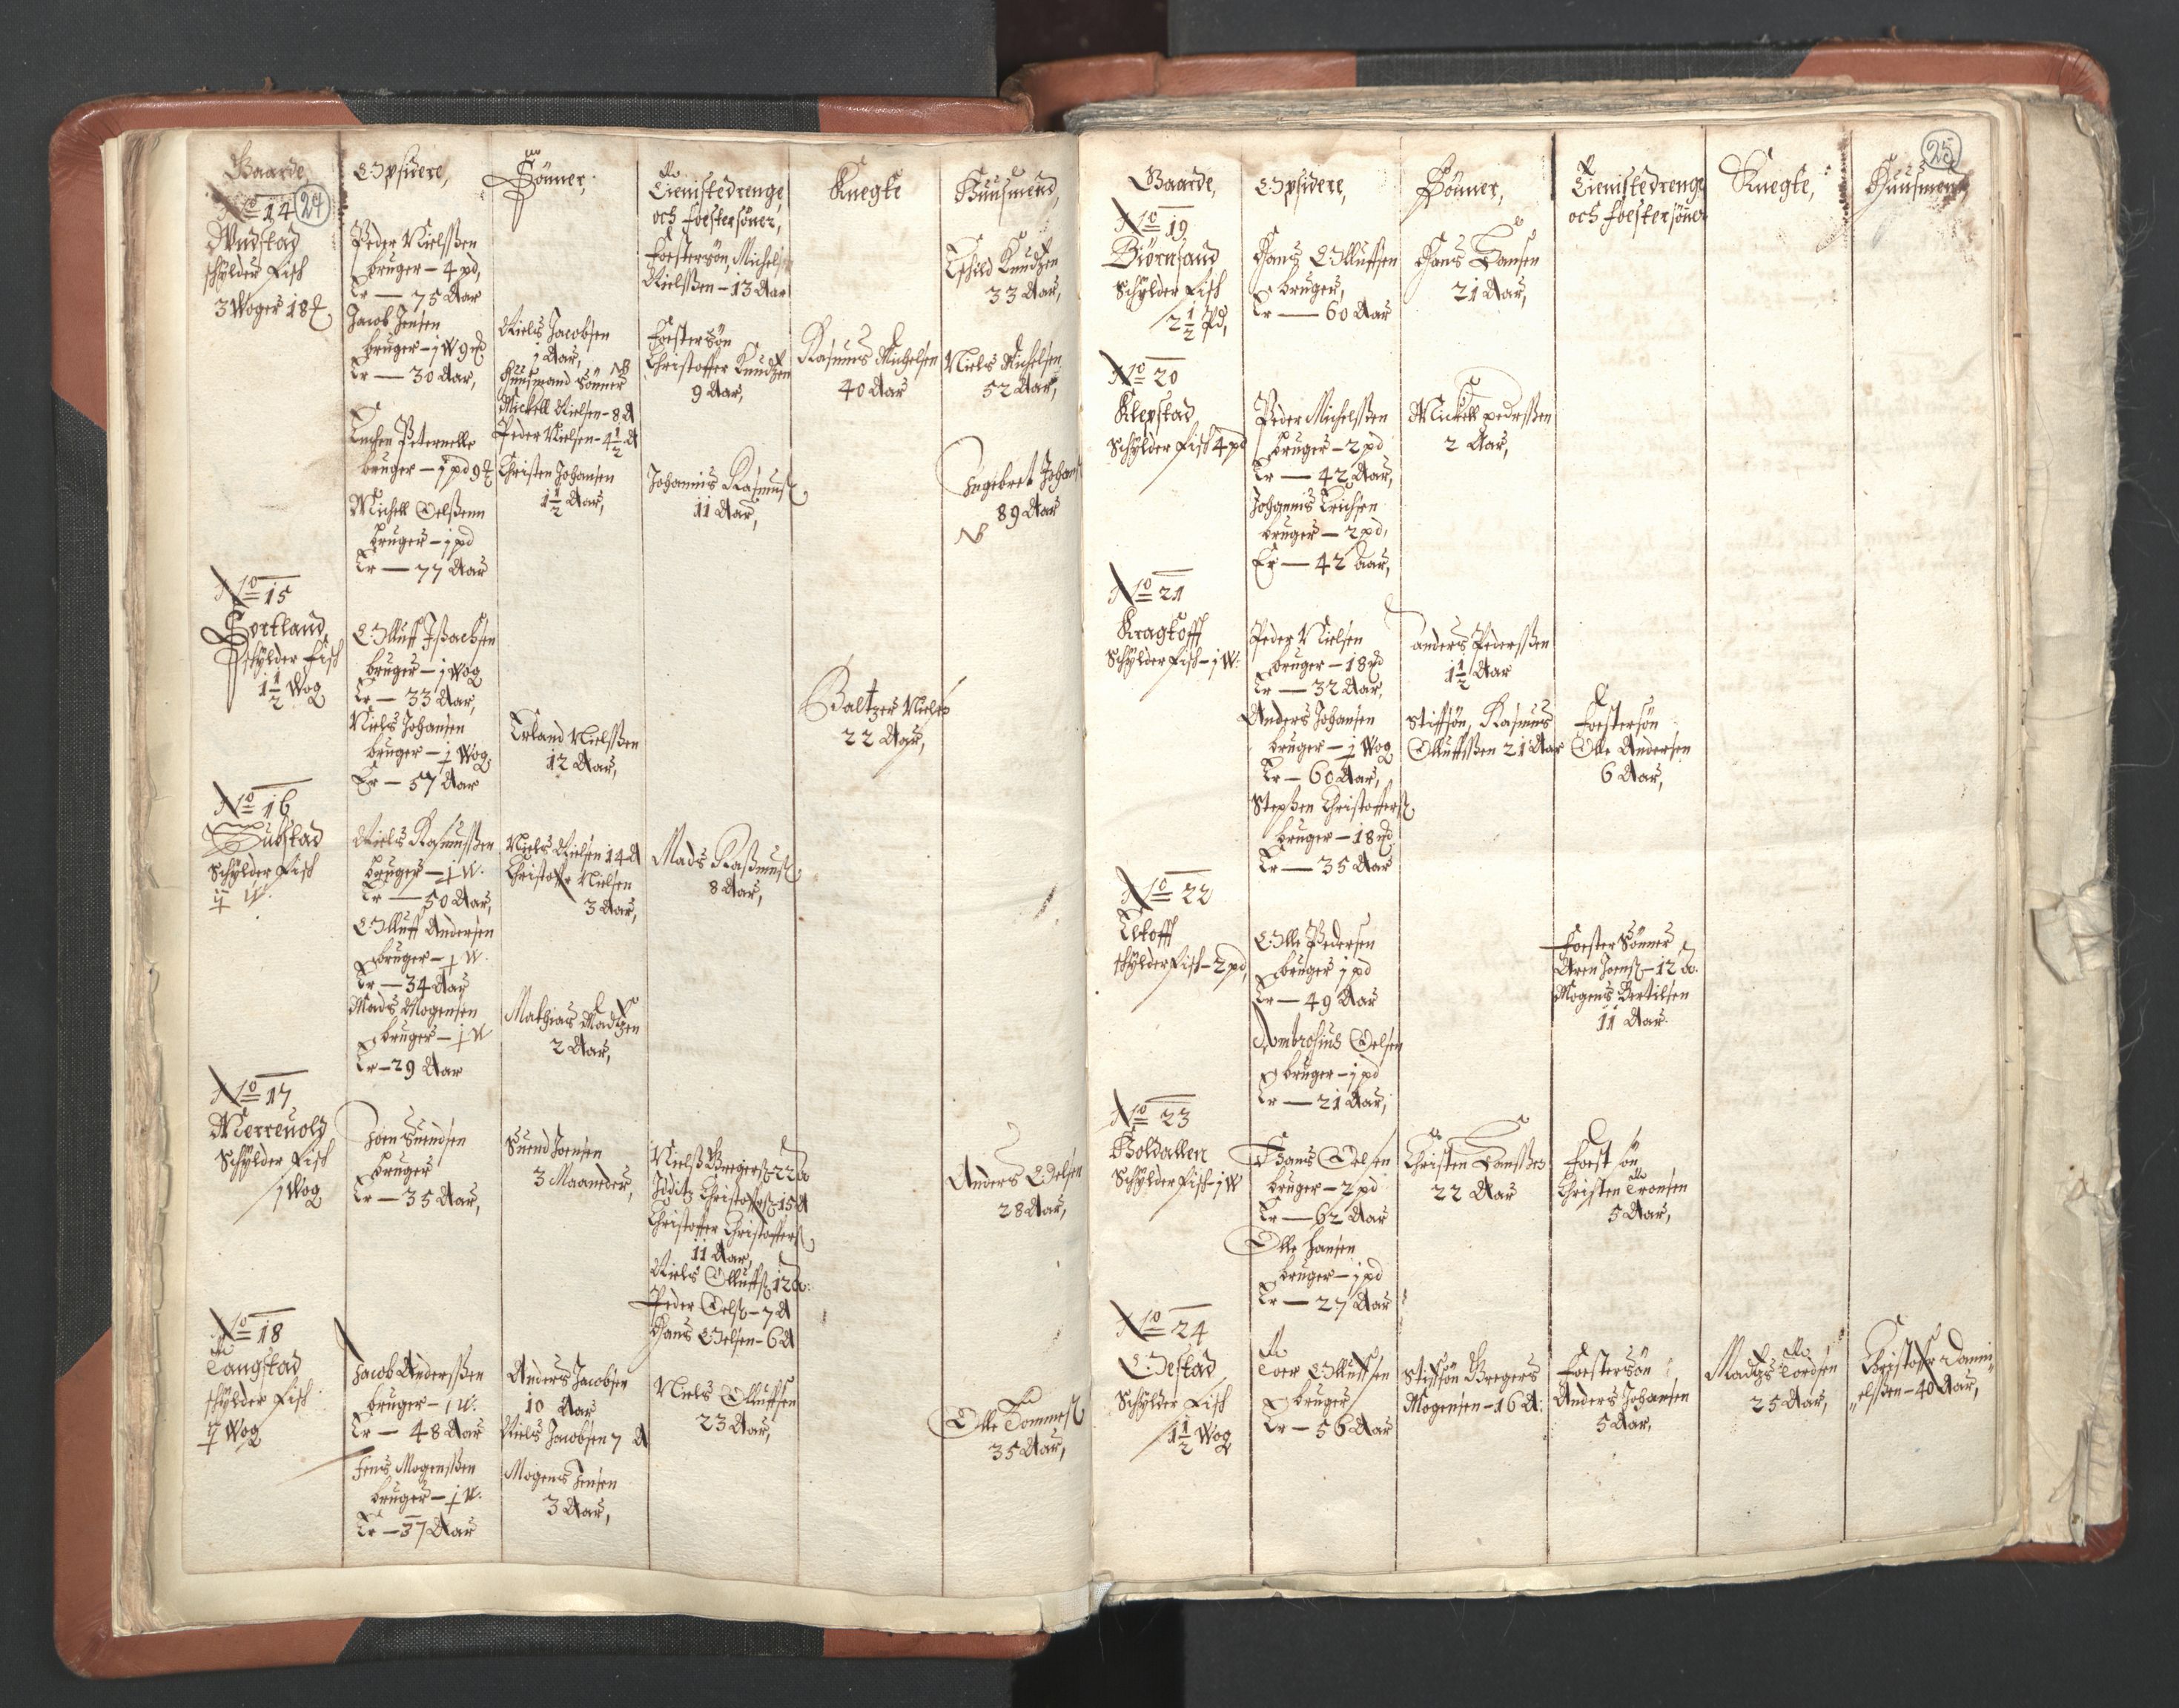 RA, Vicar's Census 1664-1666, no. 36: Lofoten and Vesterålen deanery, Senja deanery and Troms deanery, 1664-1666, p. 24-25